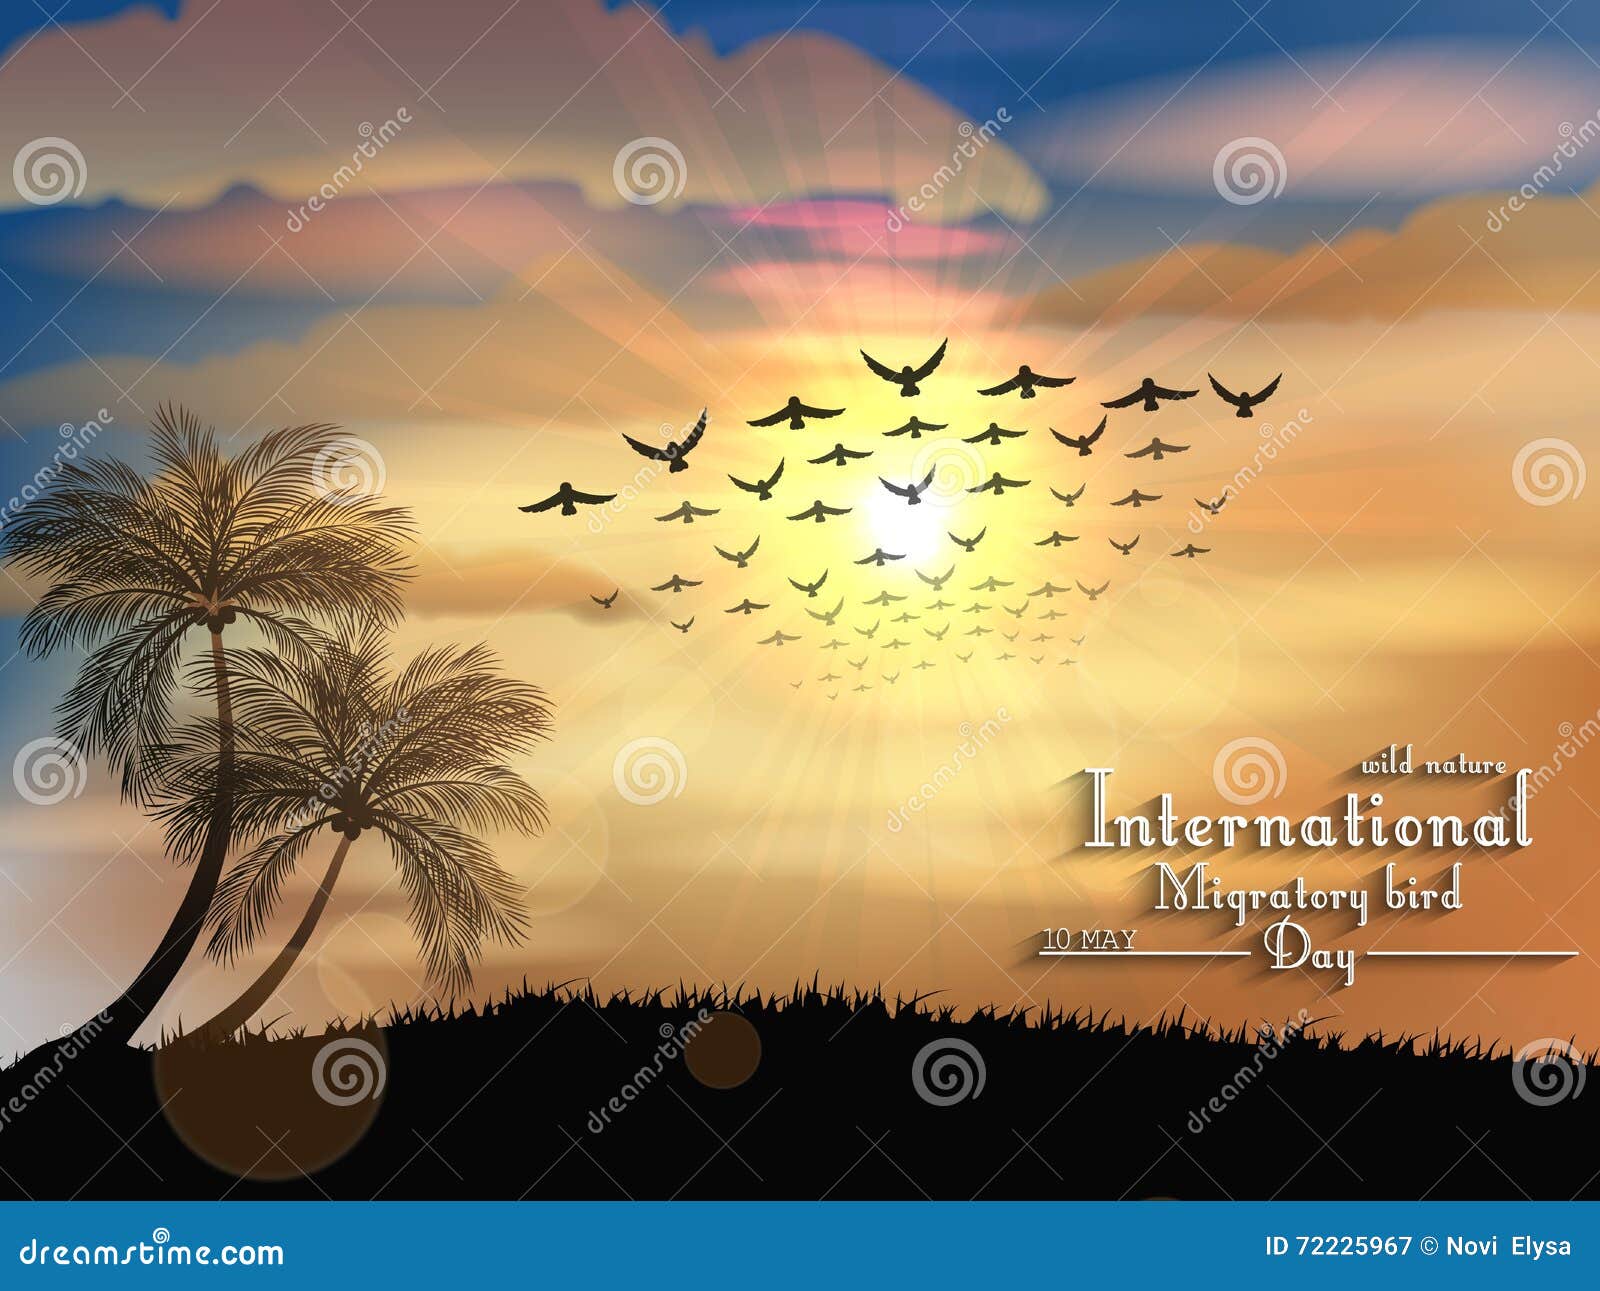 migratory birds day in sunset light